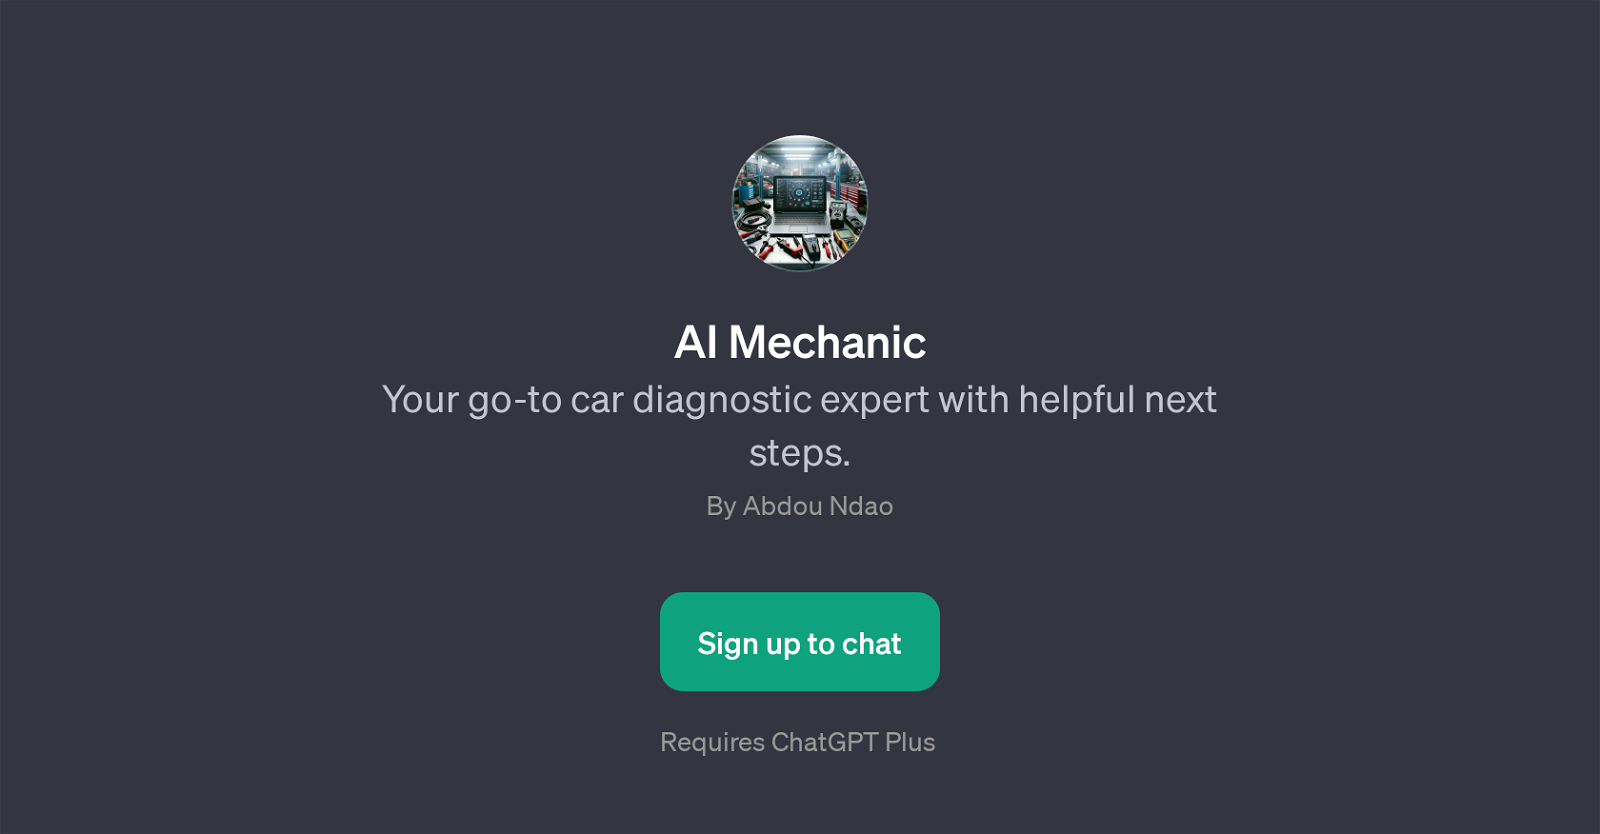 AI Mechanic website